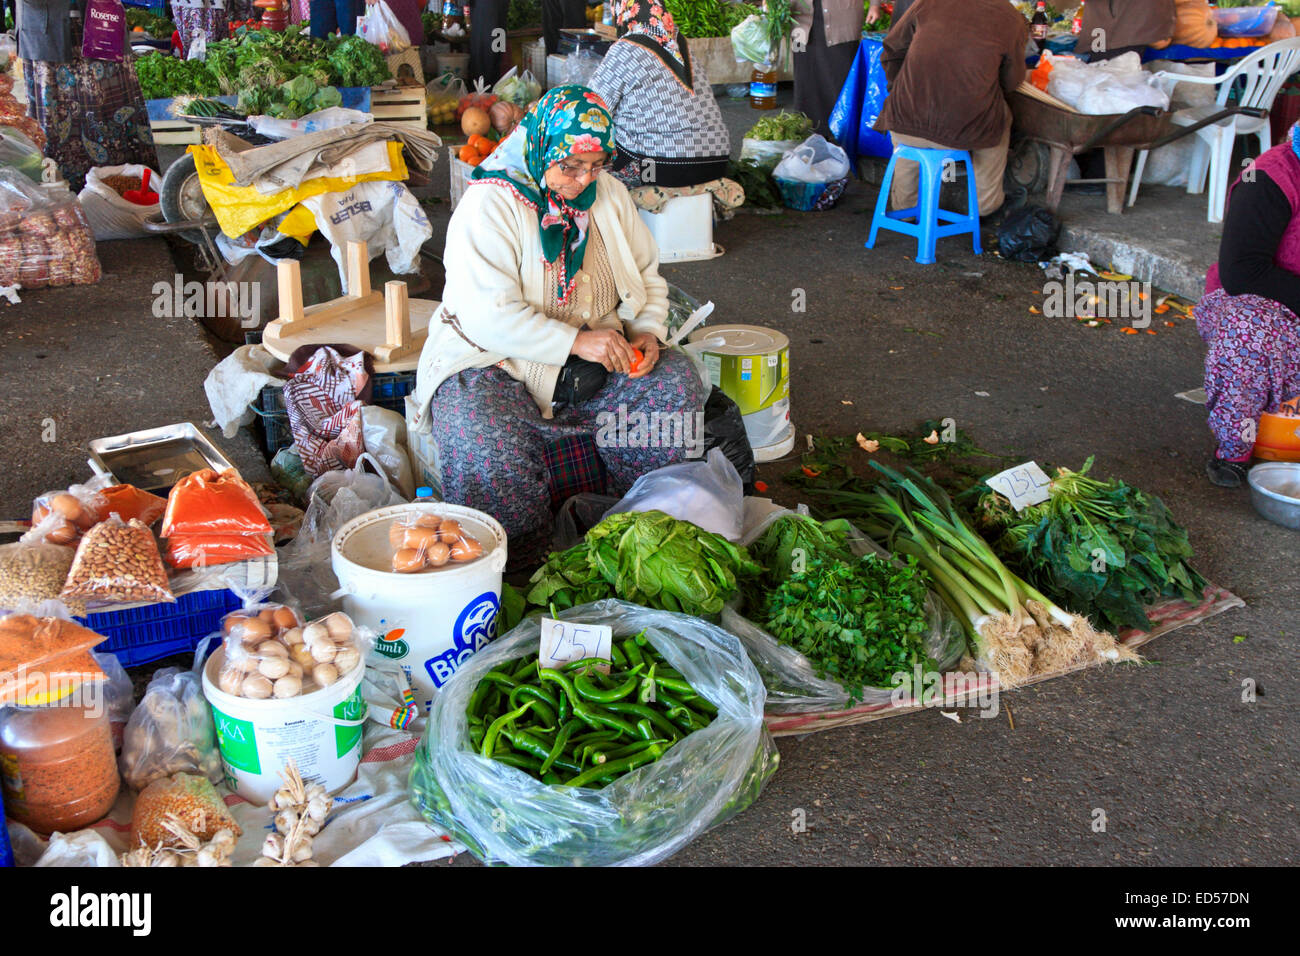 Vegetable Stall in the Fruit market, Manavgat, Turkey Stock Photo